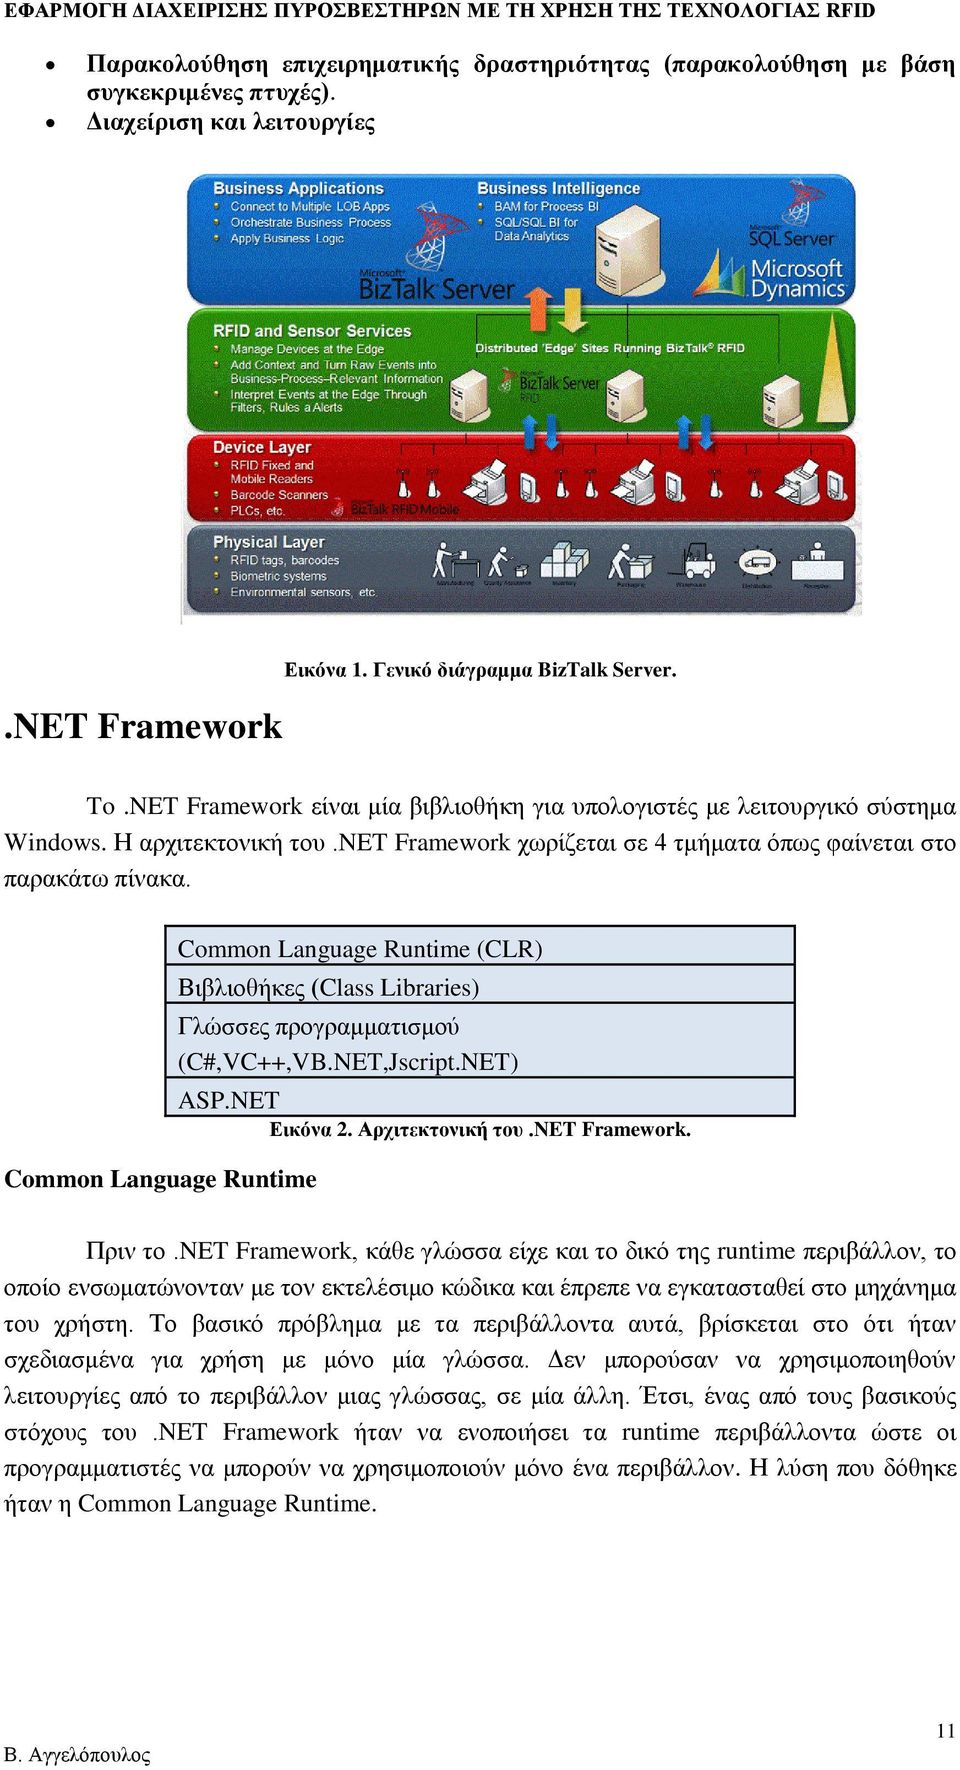 Common Language Runtime Common Language Runtime (CLR) Βιβλιοθήκες (Class Libraries) Γλώσσες προγραμματισμού (C#,VC++,VB.NET,Jscript.NET) ASP.NET Εικόνα 2. Αρχιτεκτονική του.net Framework. Πριν το.